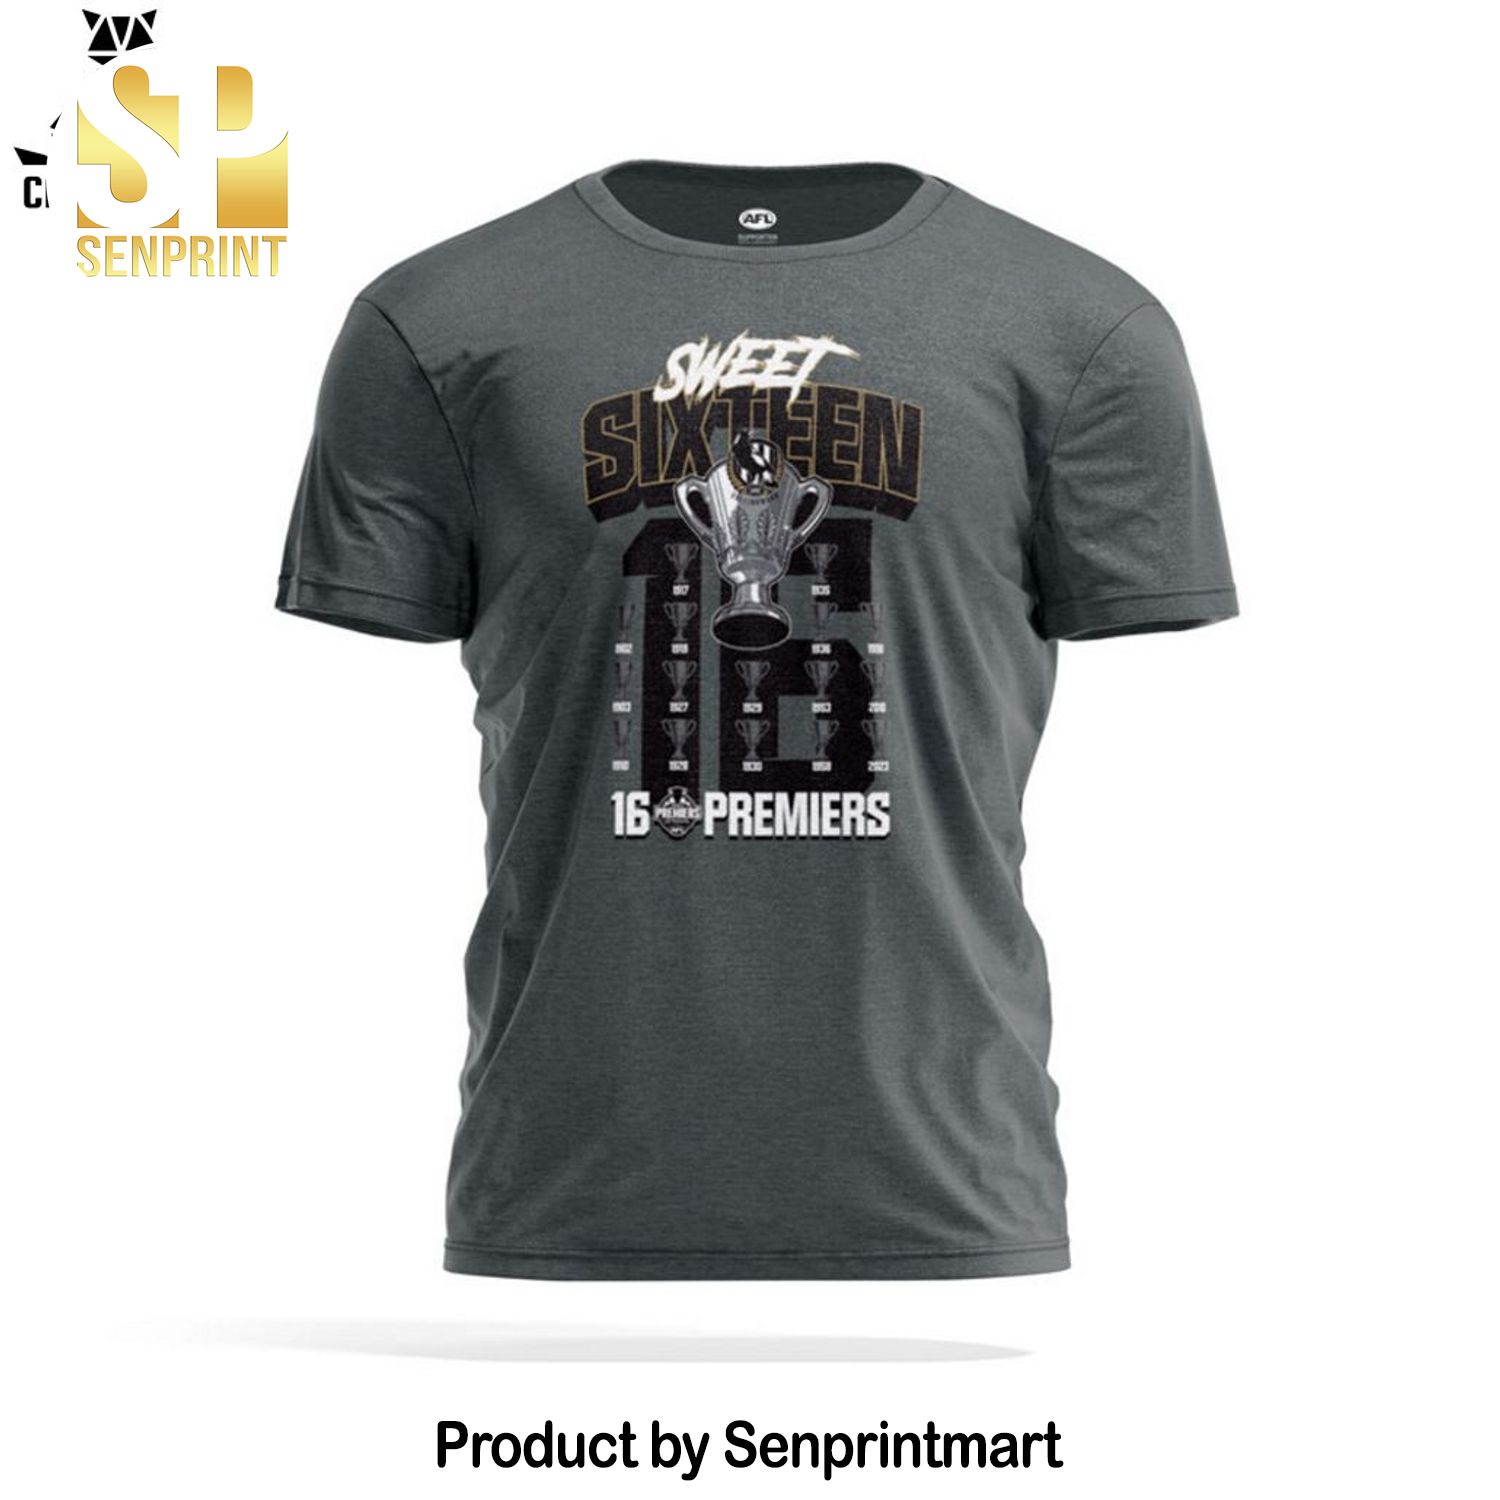 Sweet Sixteen 16 Premiers Gary AFL Full Printed 3D Shirt